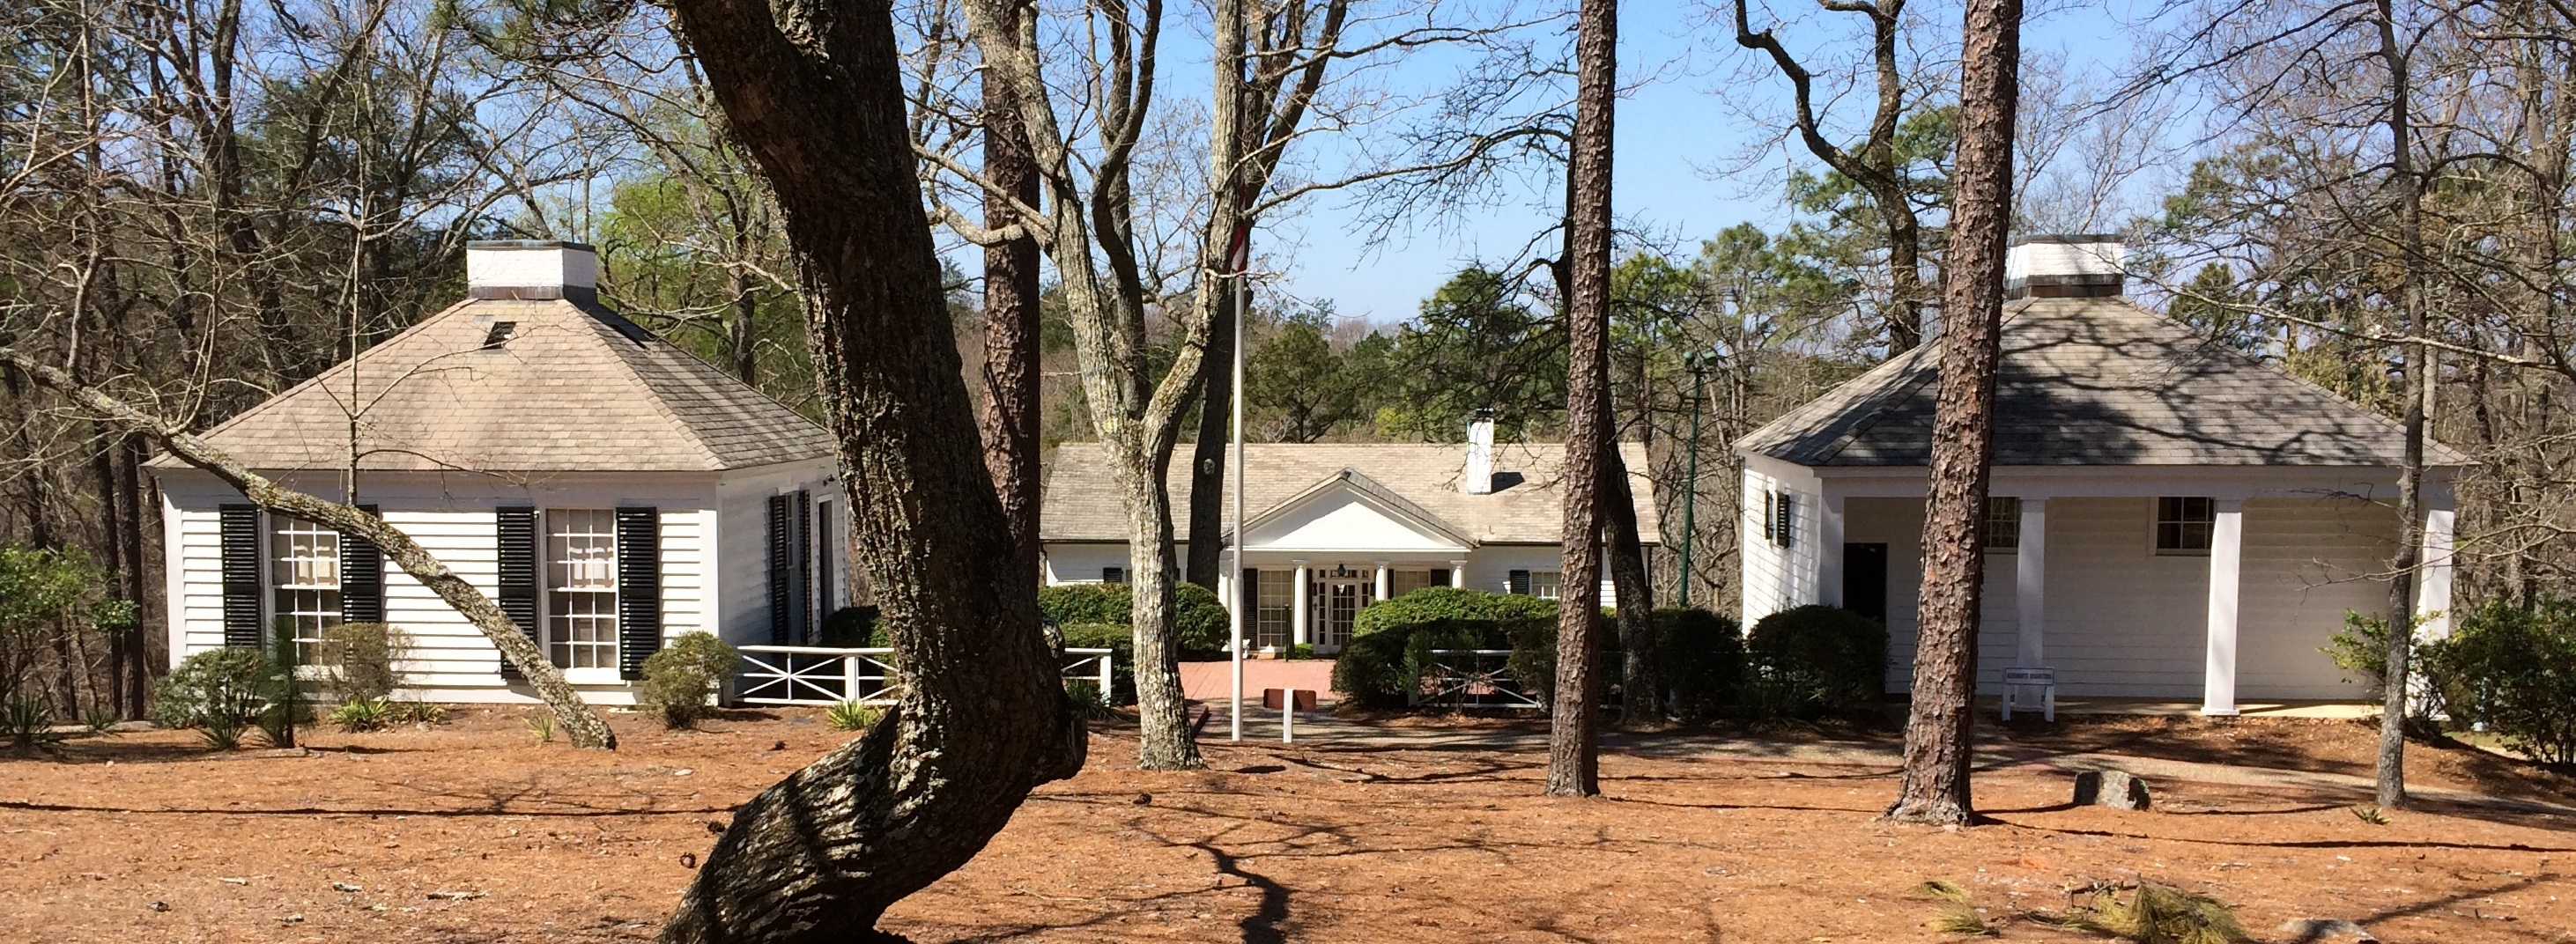 Little White House at Warm Springs, Georgia. Photo taken on March 30, 2014.